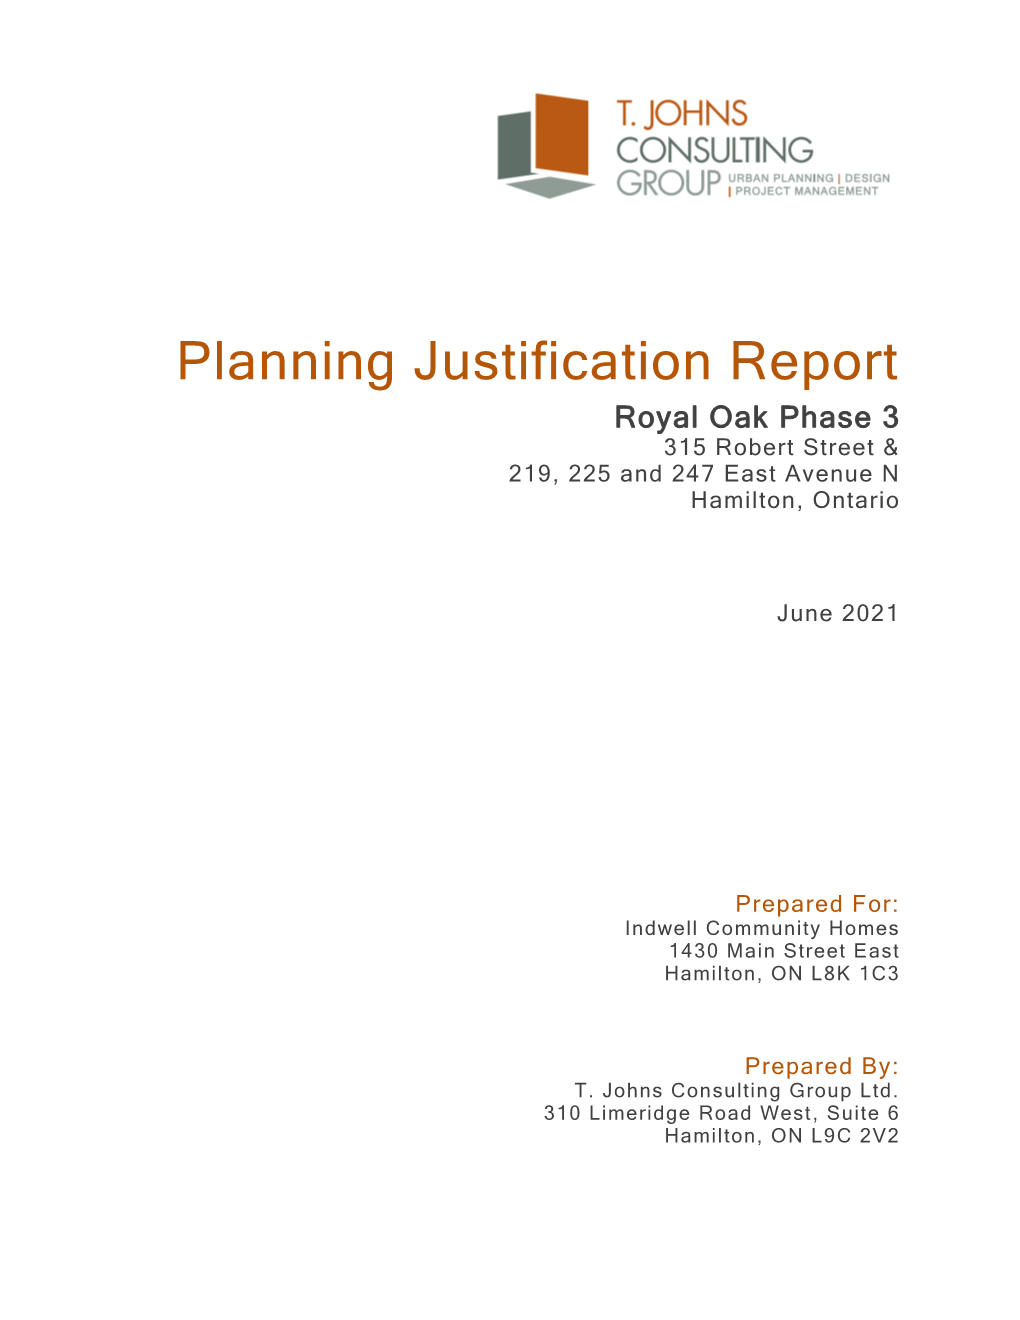 Planning Justification Report Royal Oak Phase 3 315 Robert Street & 219, 225 and 247 East Avenue N Hamilton, Ontario